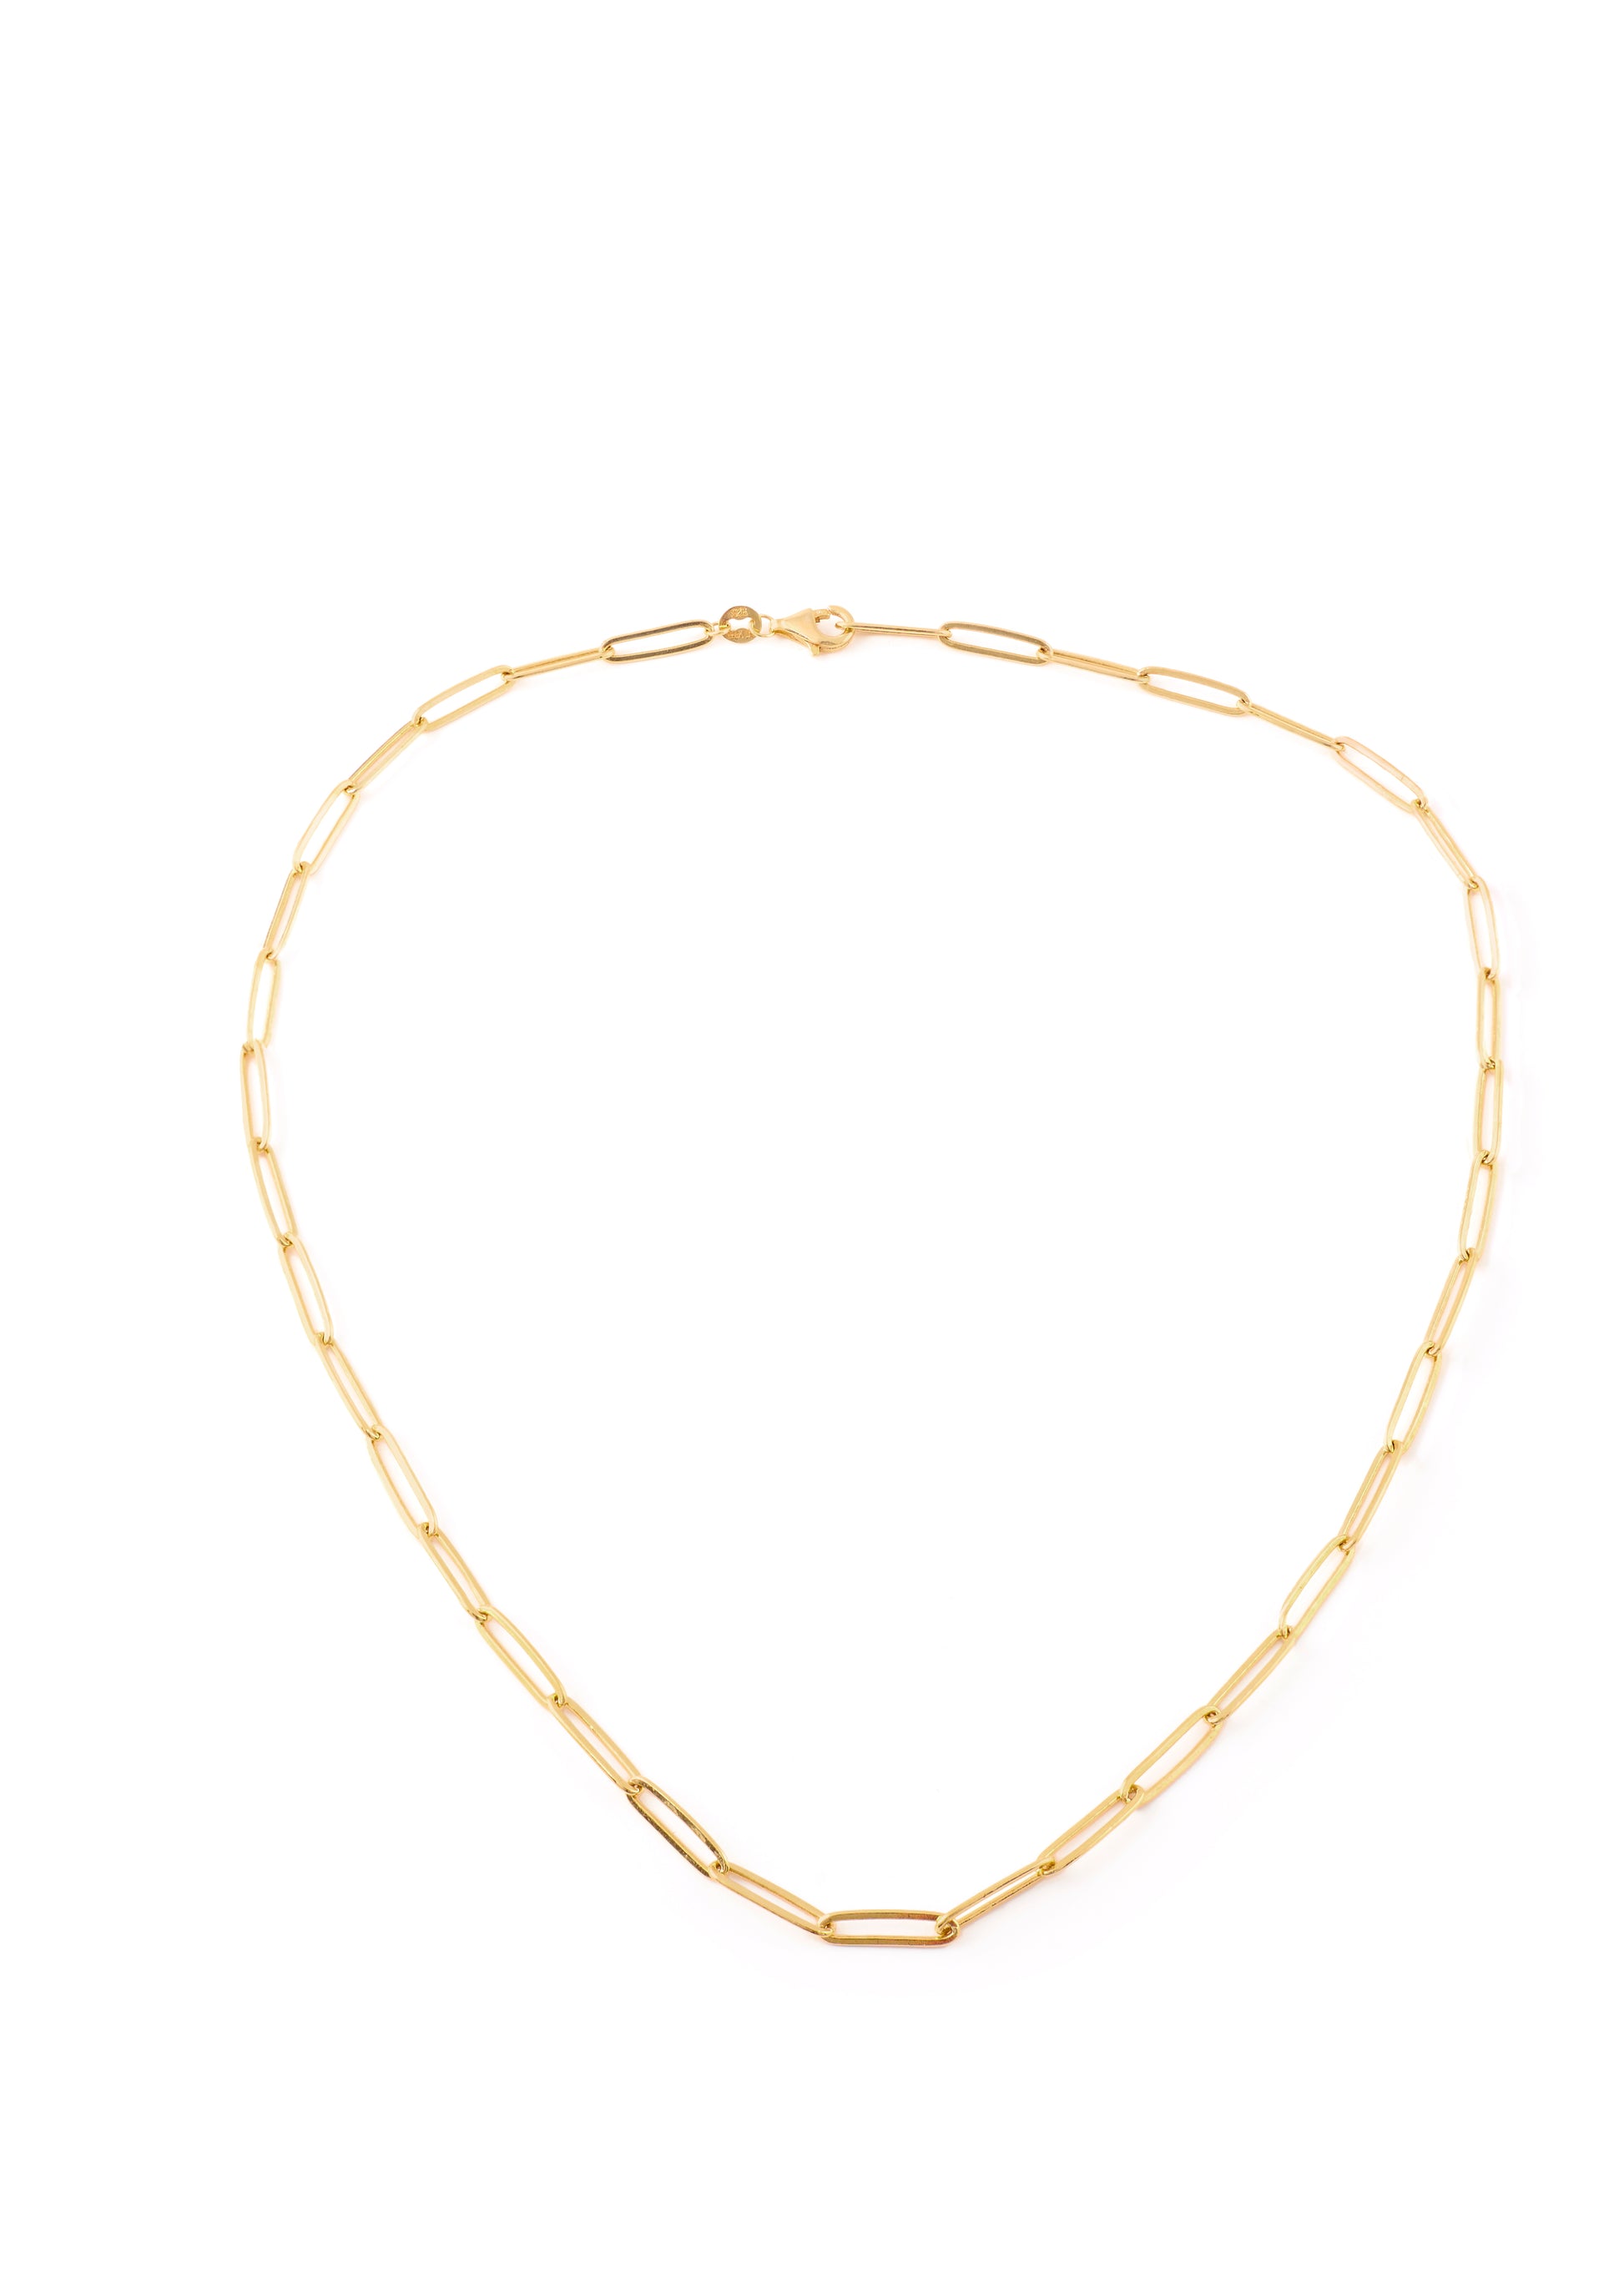 Gold Thin Rectangular Belcher Chain - Jessimara